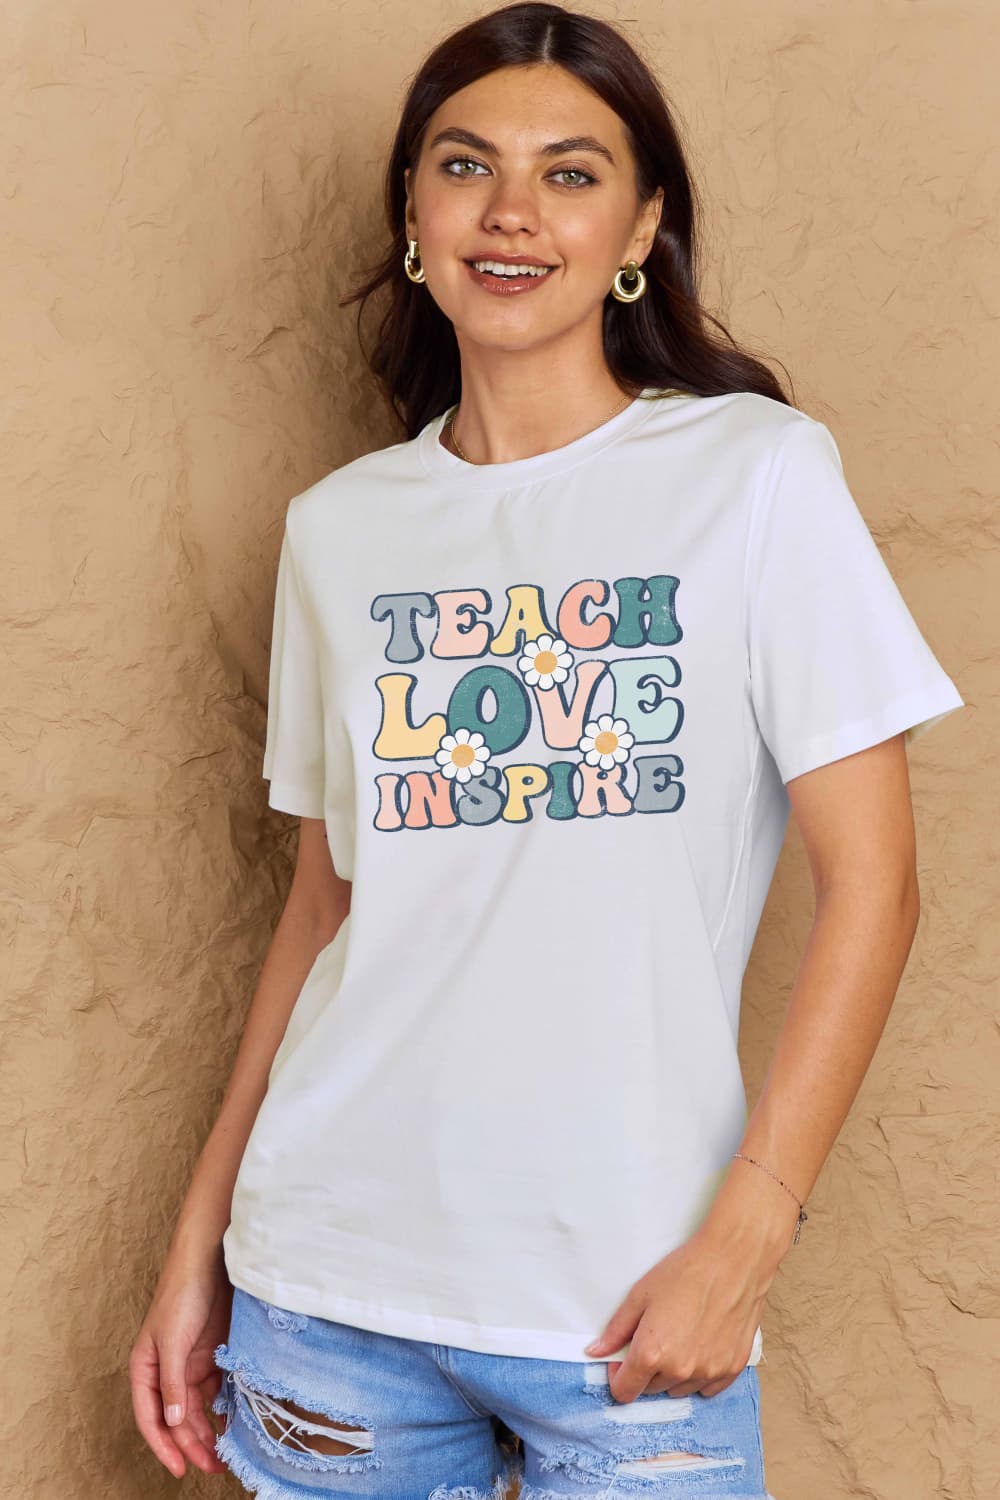 Simply Love TEACH LOVE INSPIRE Graphic Cotton T-Shirt